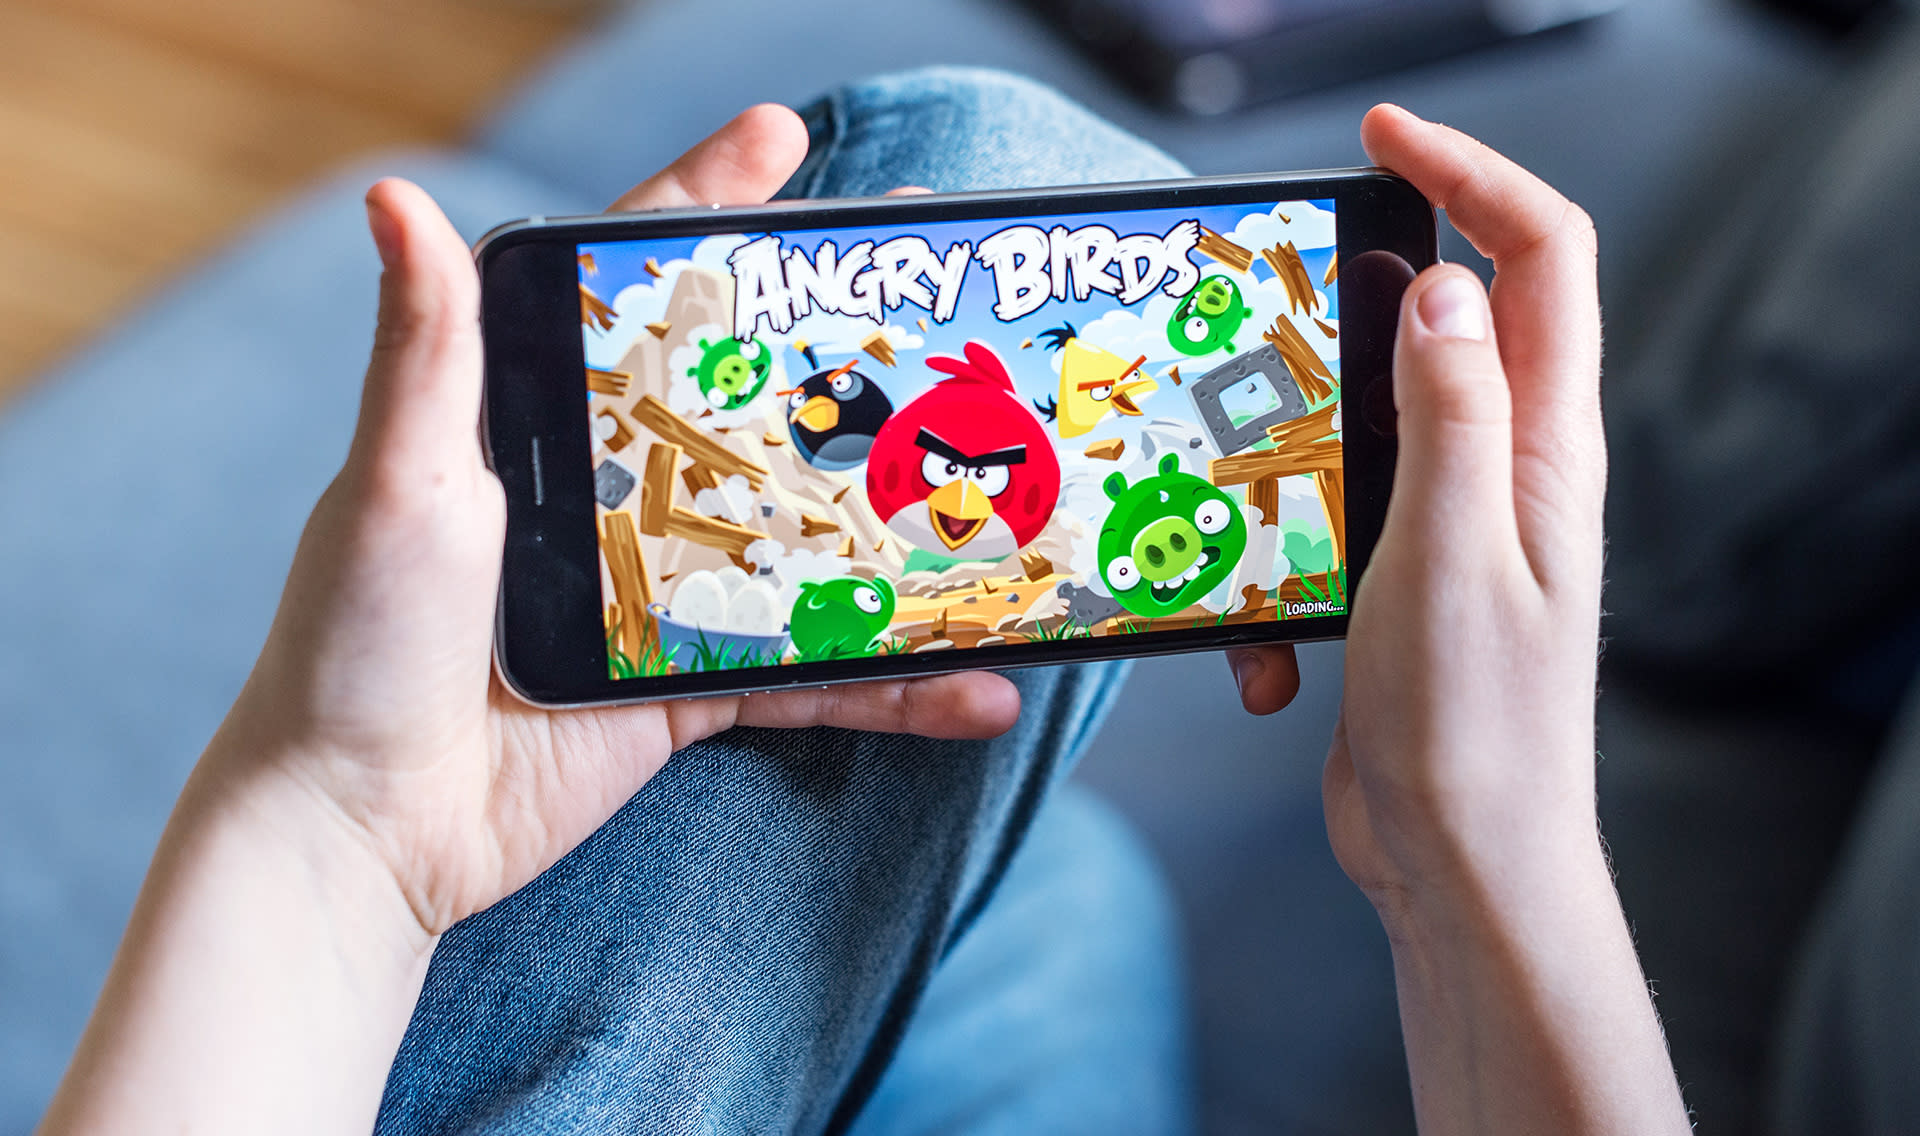 WSJ: Der Gaming-Gigant Sega kauft die Firma Angry Birds